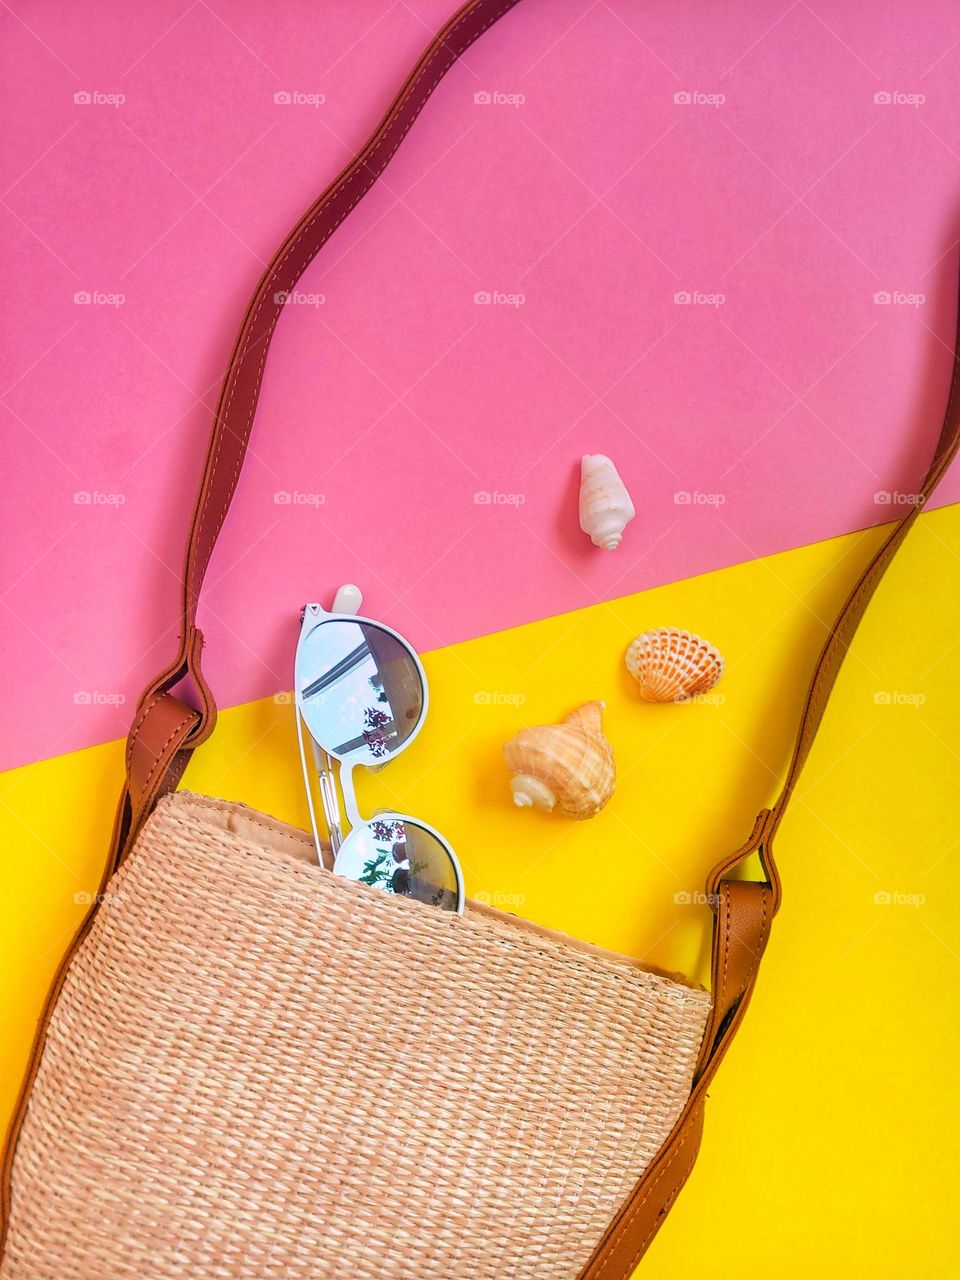 Summer bag, sunglasses and seashells